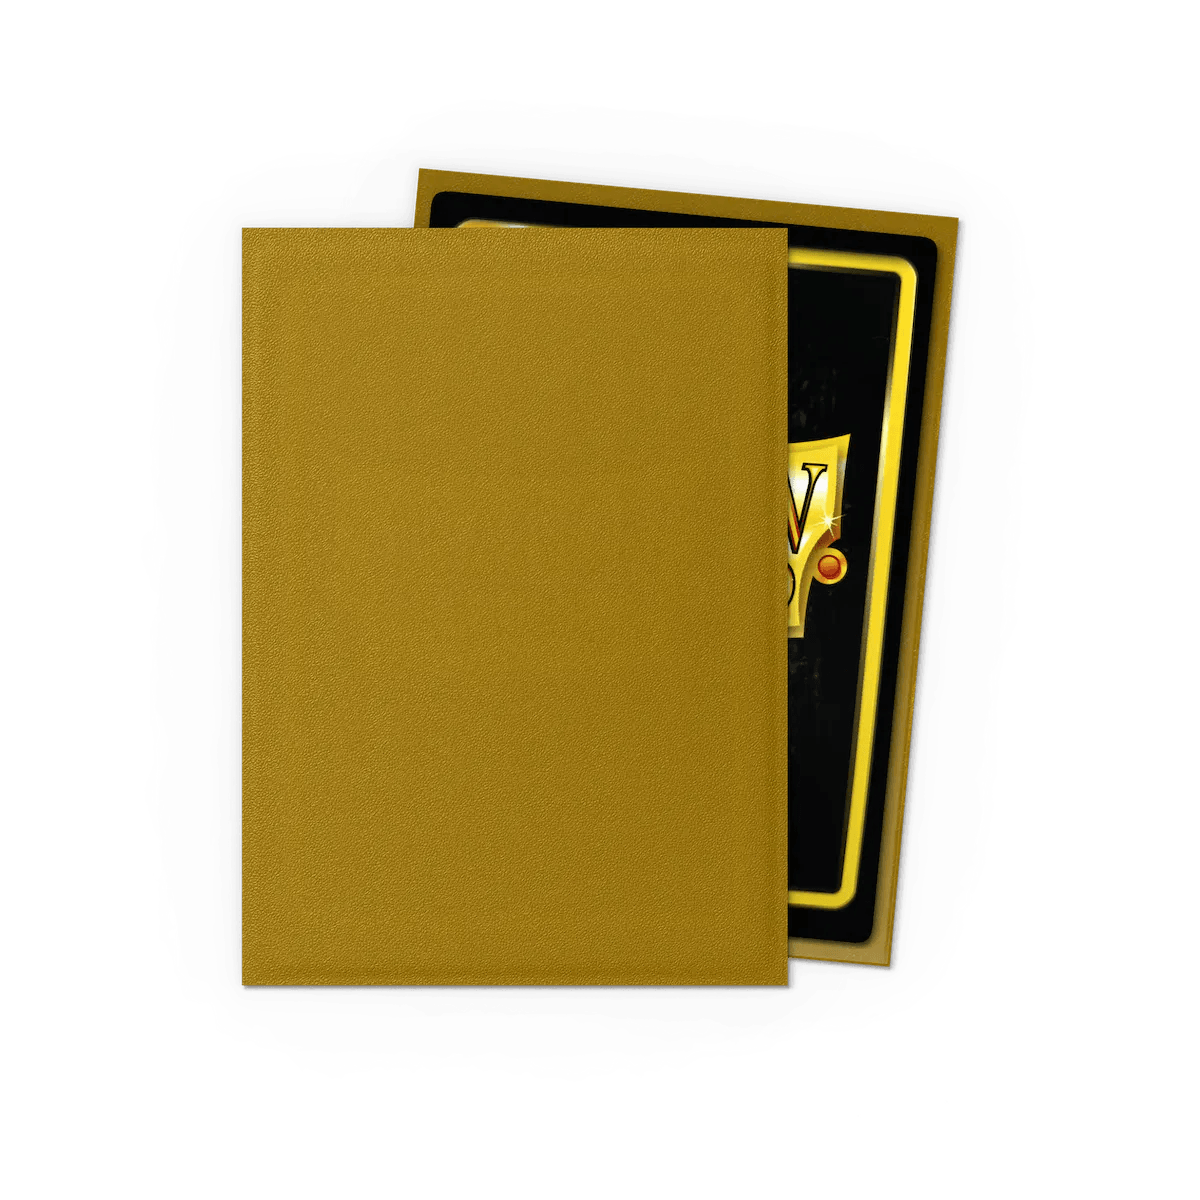 Dragon Shield - Matte Sleeves - Standard Size - 100pk - Gold - The Card Vault